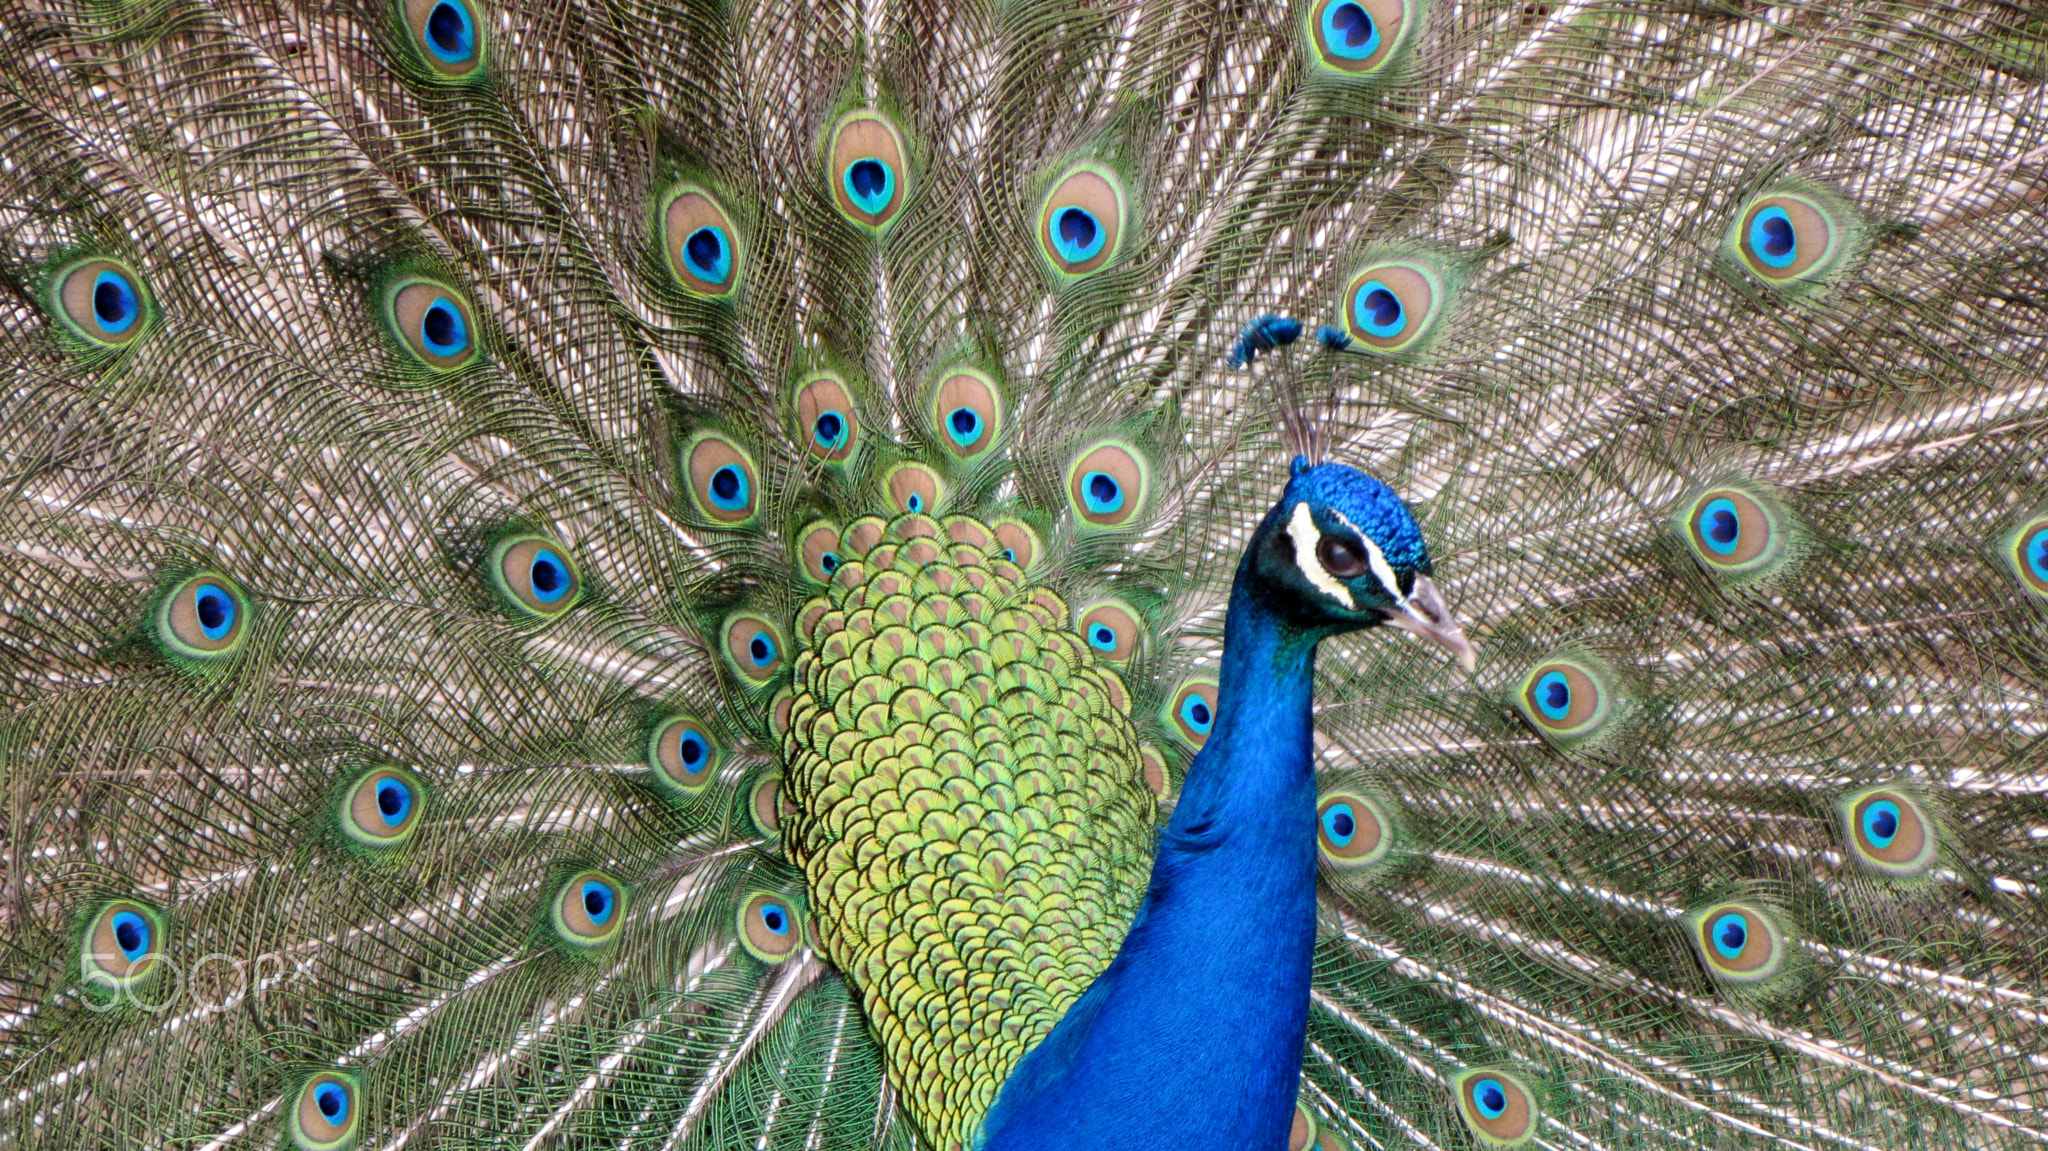 Peacock.